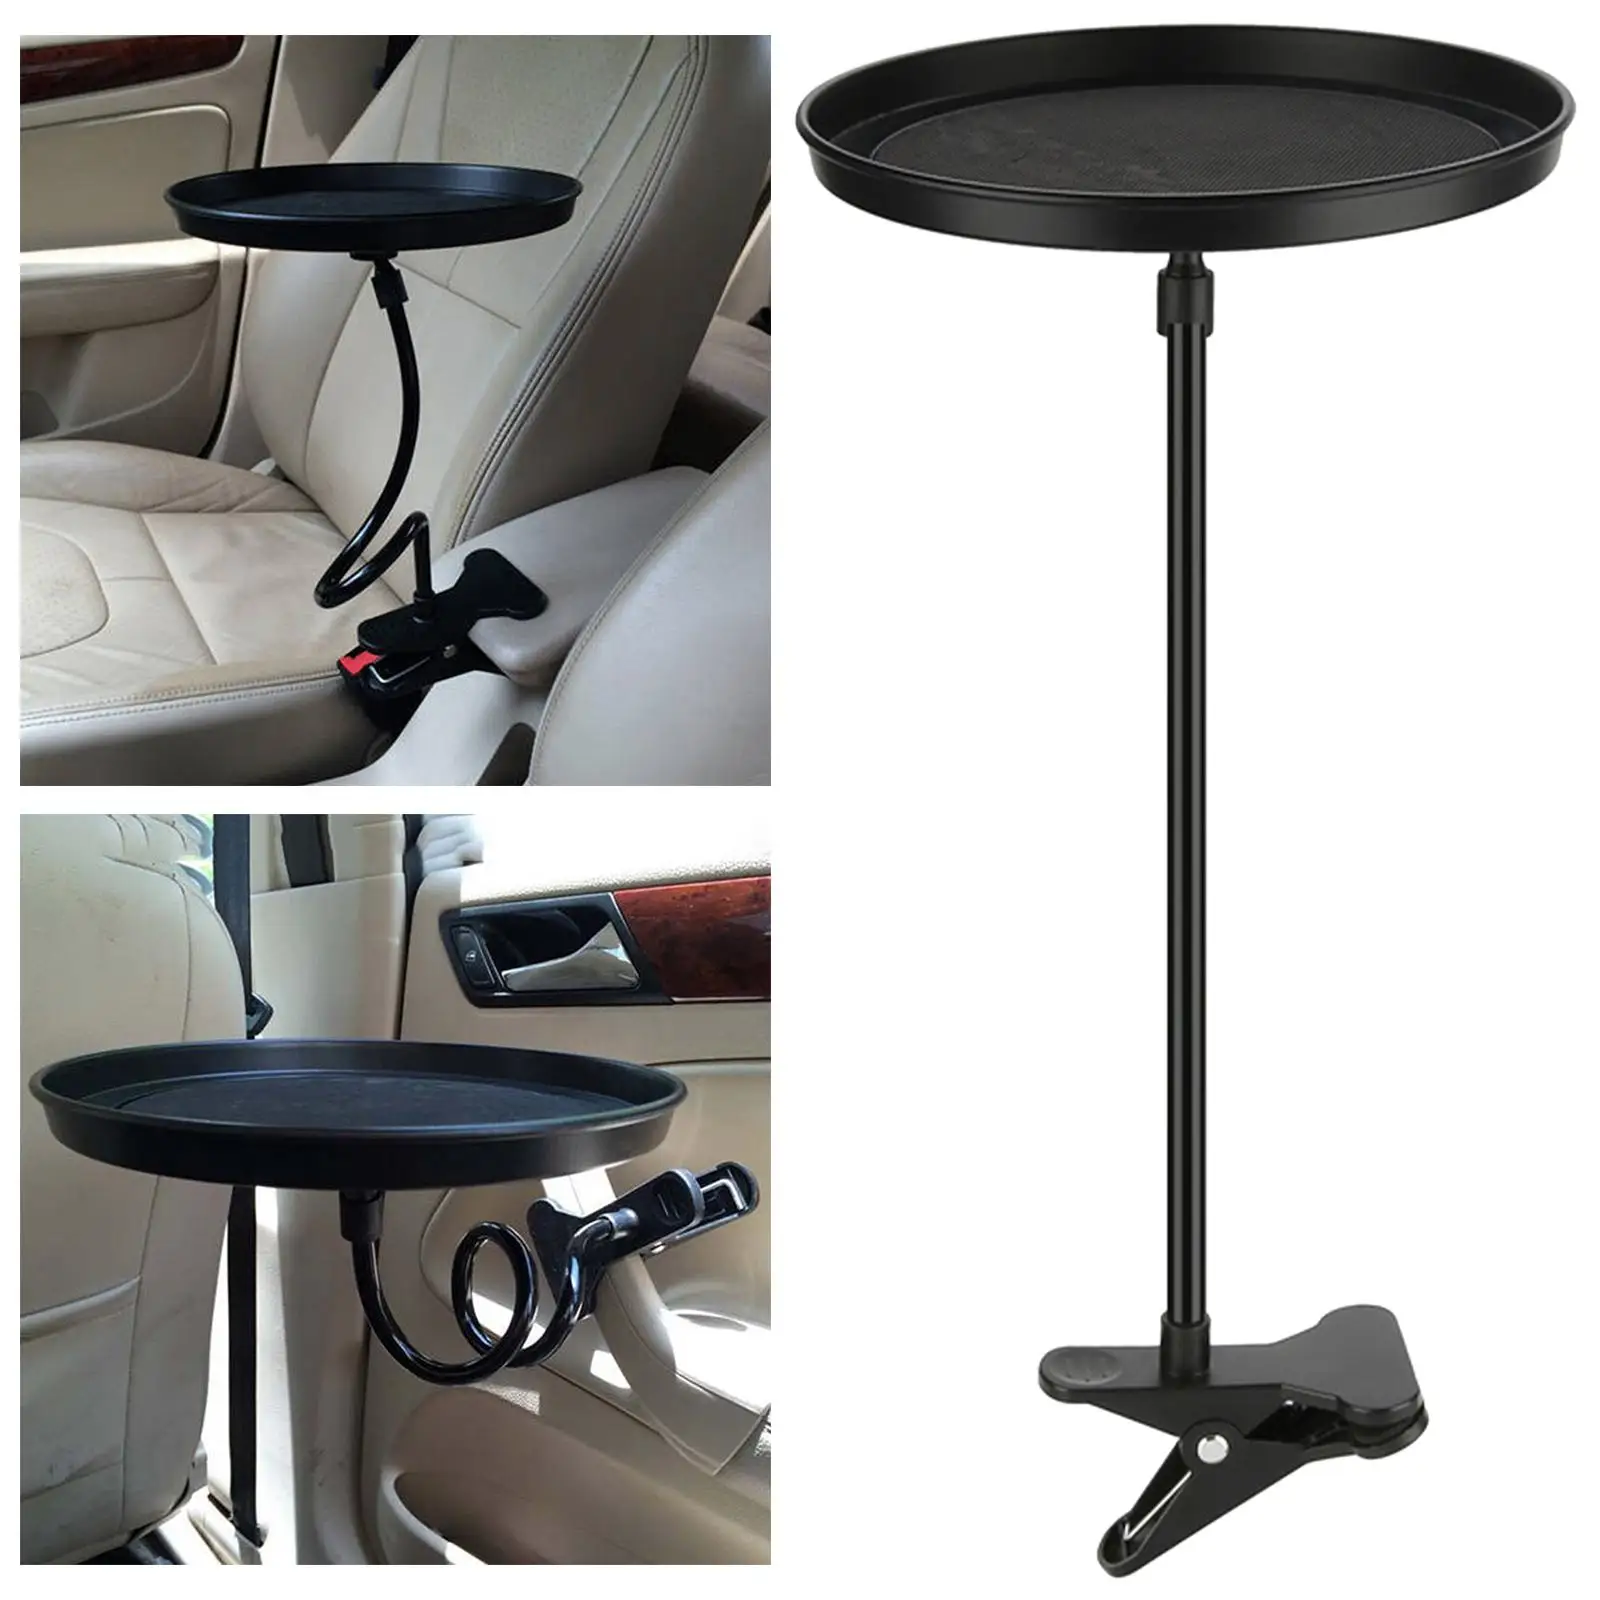 1x Car Food Tray Non-Skid Adjustable Black Universal Round Holder W/ Clamp  Passenger Seat Bottle Eating